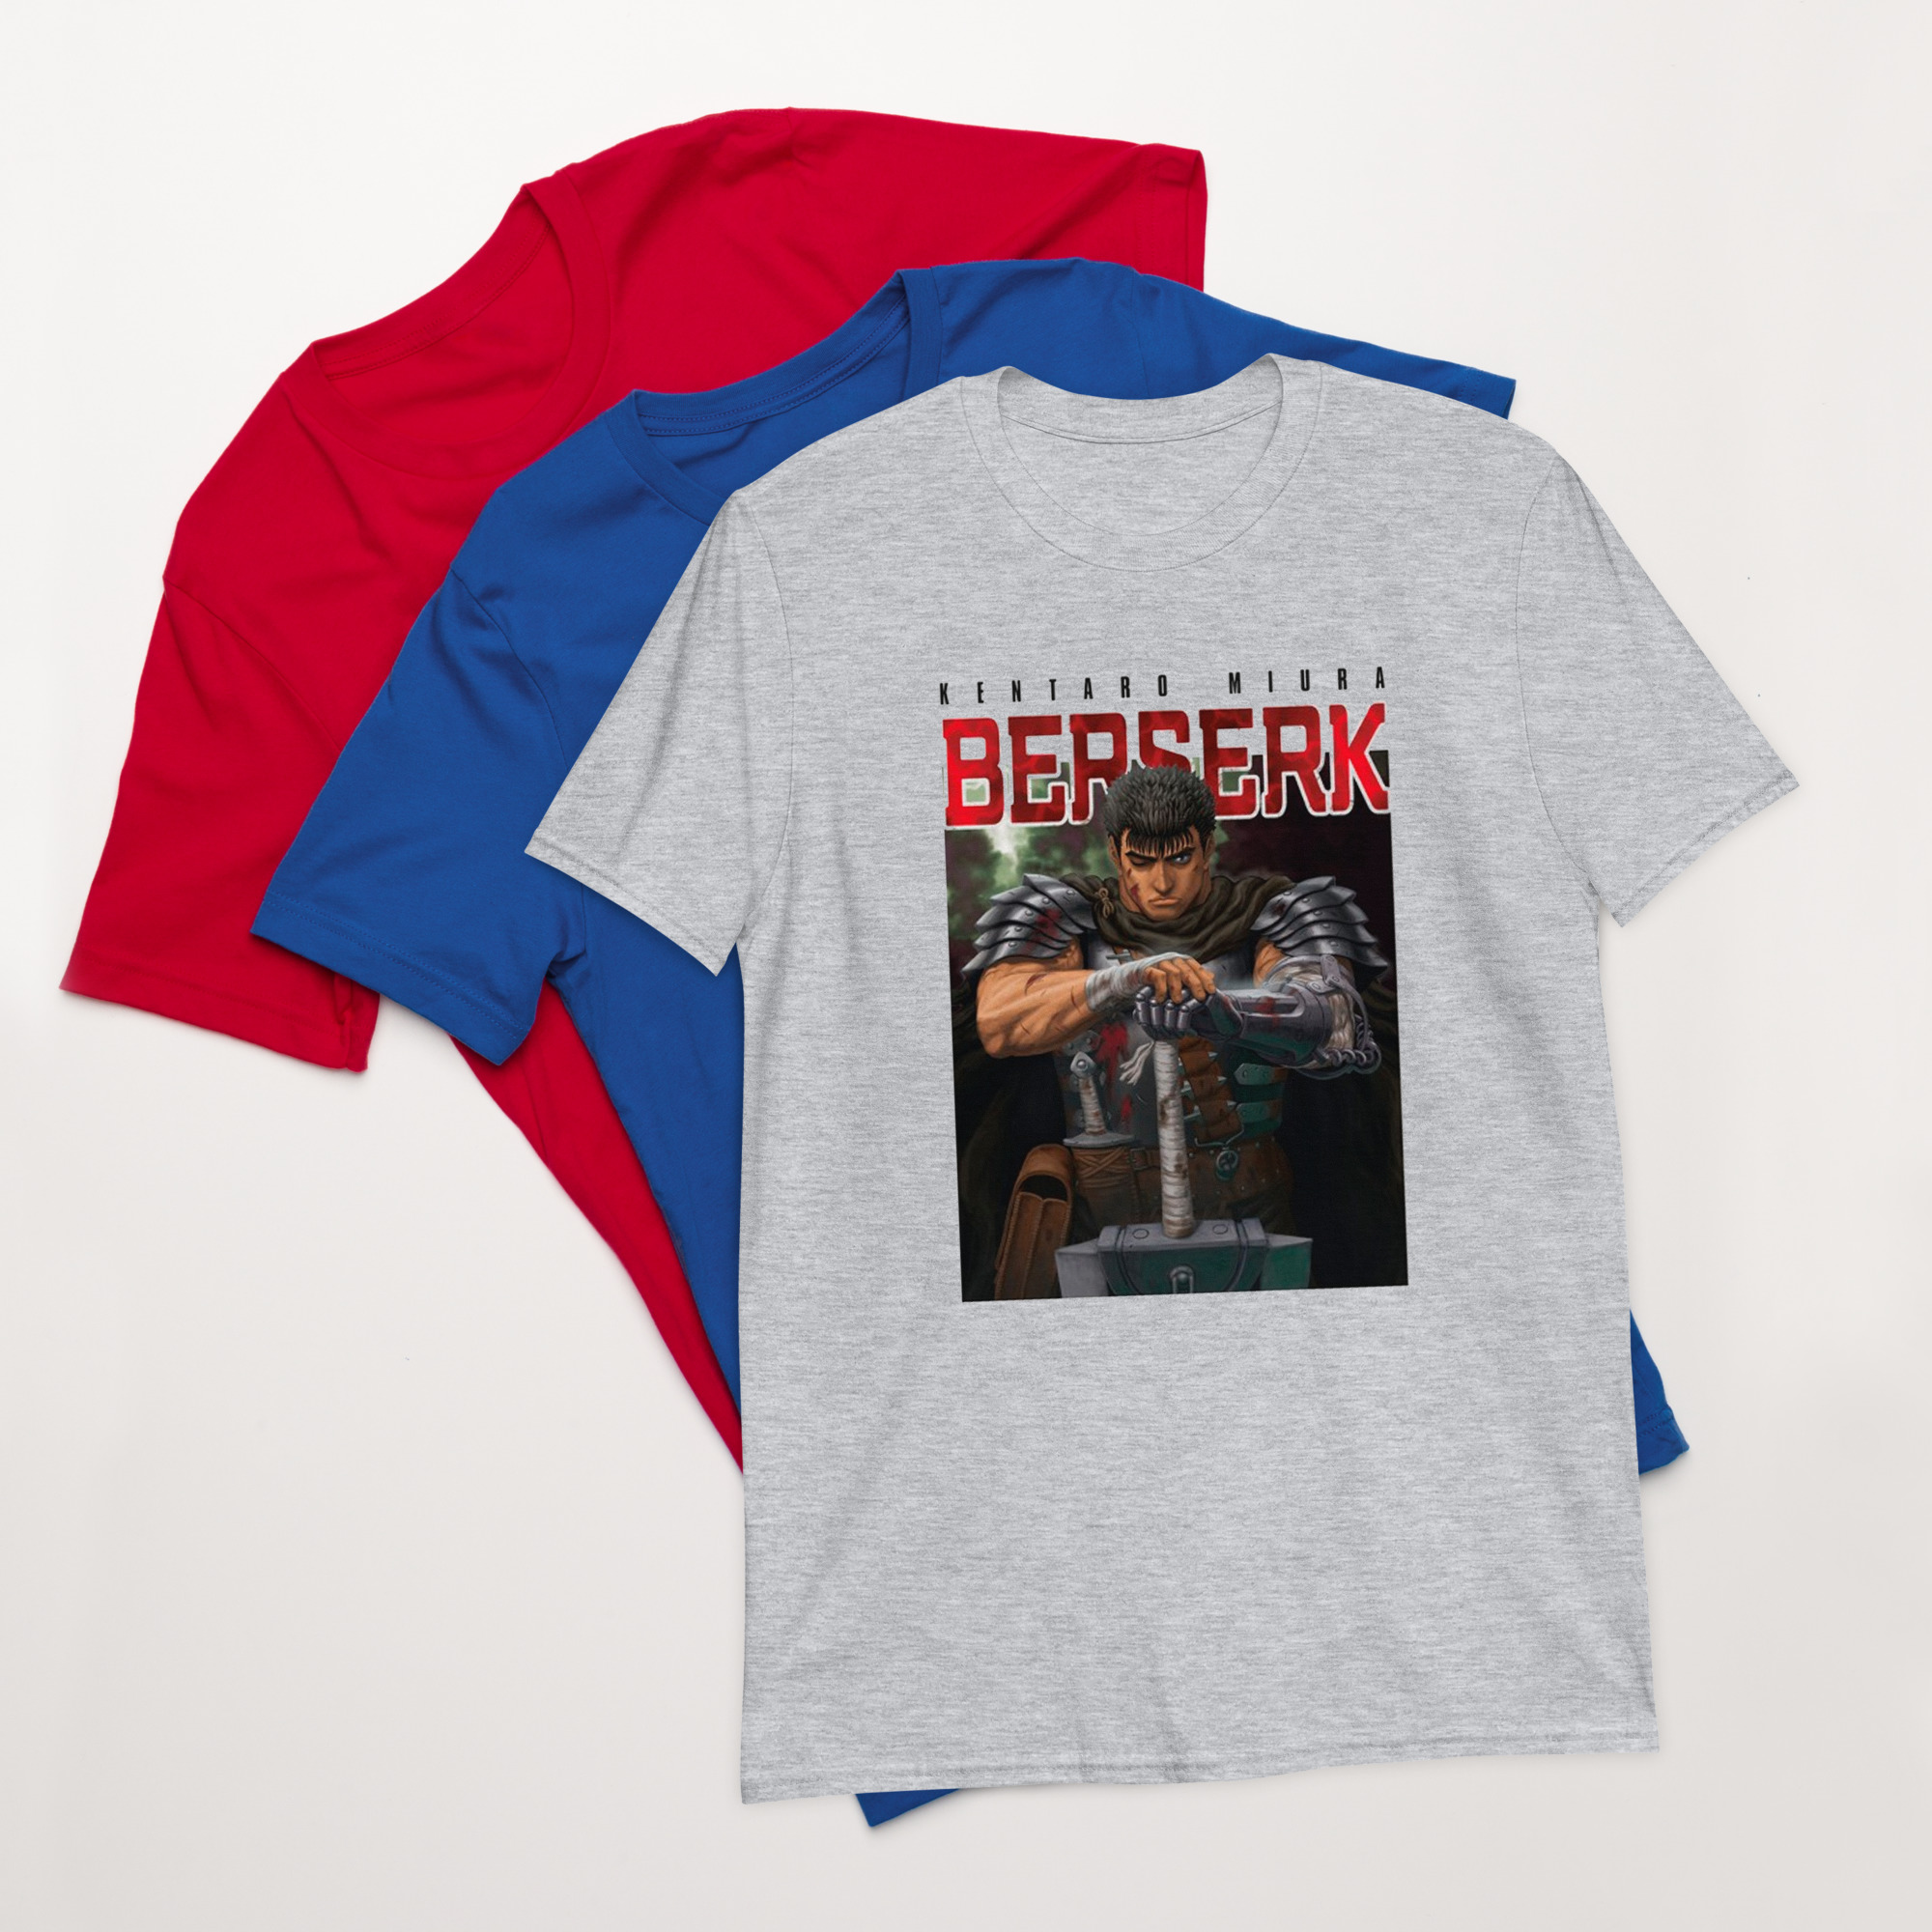 Camiseta Berserk - Guts